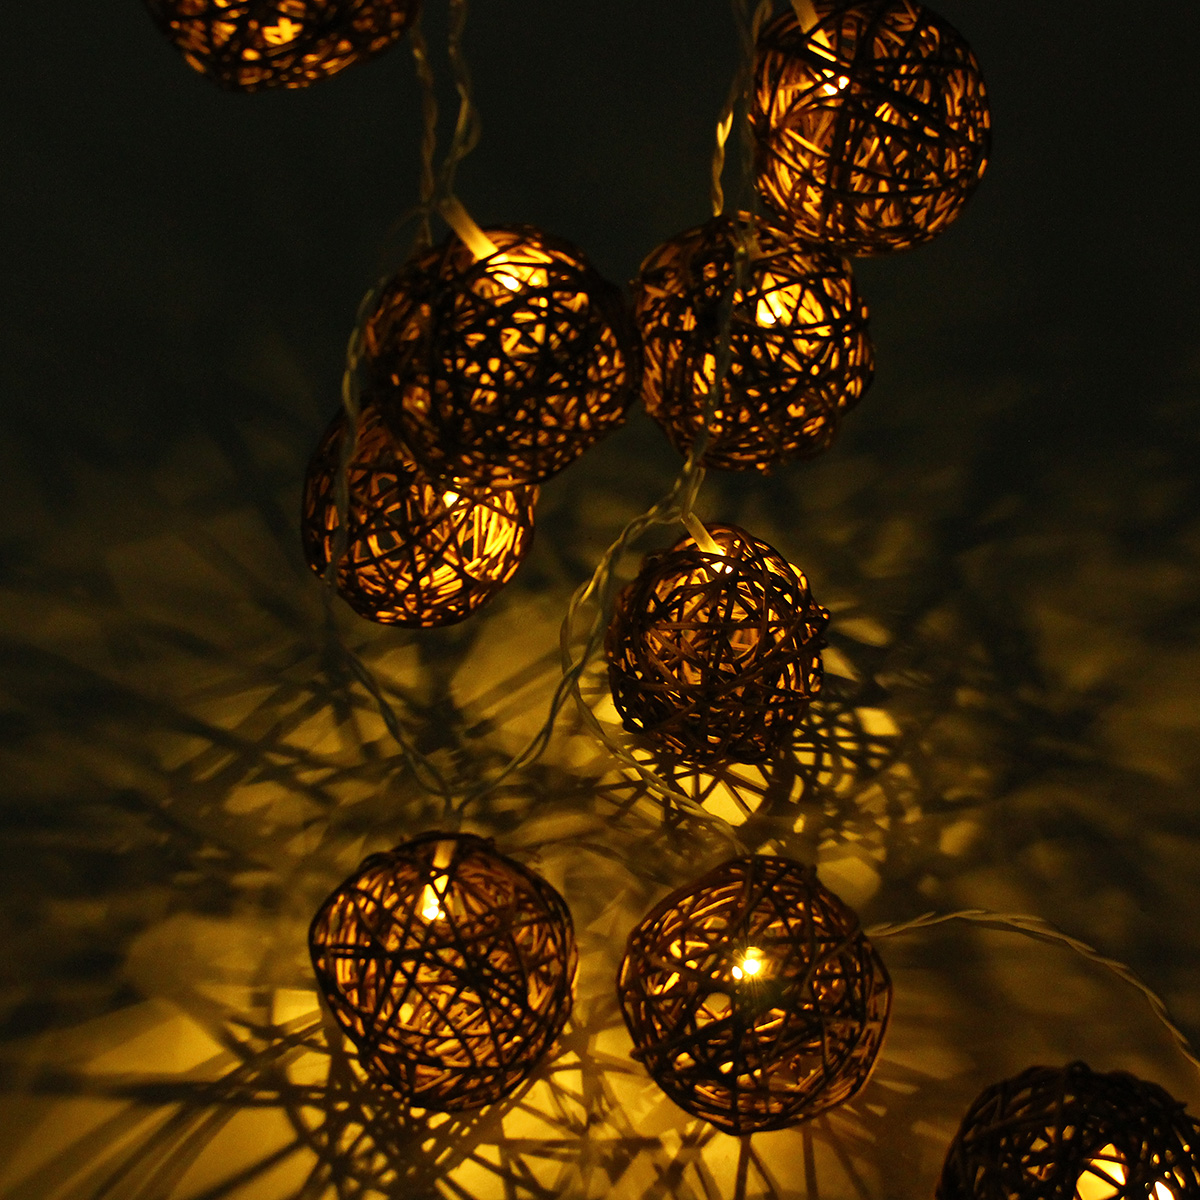 35 LED Rattan Ball String Light Home Garden Fairy Colorful Lamp Wedding Party Xmas Decor